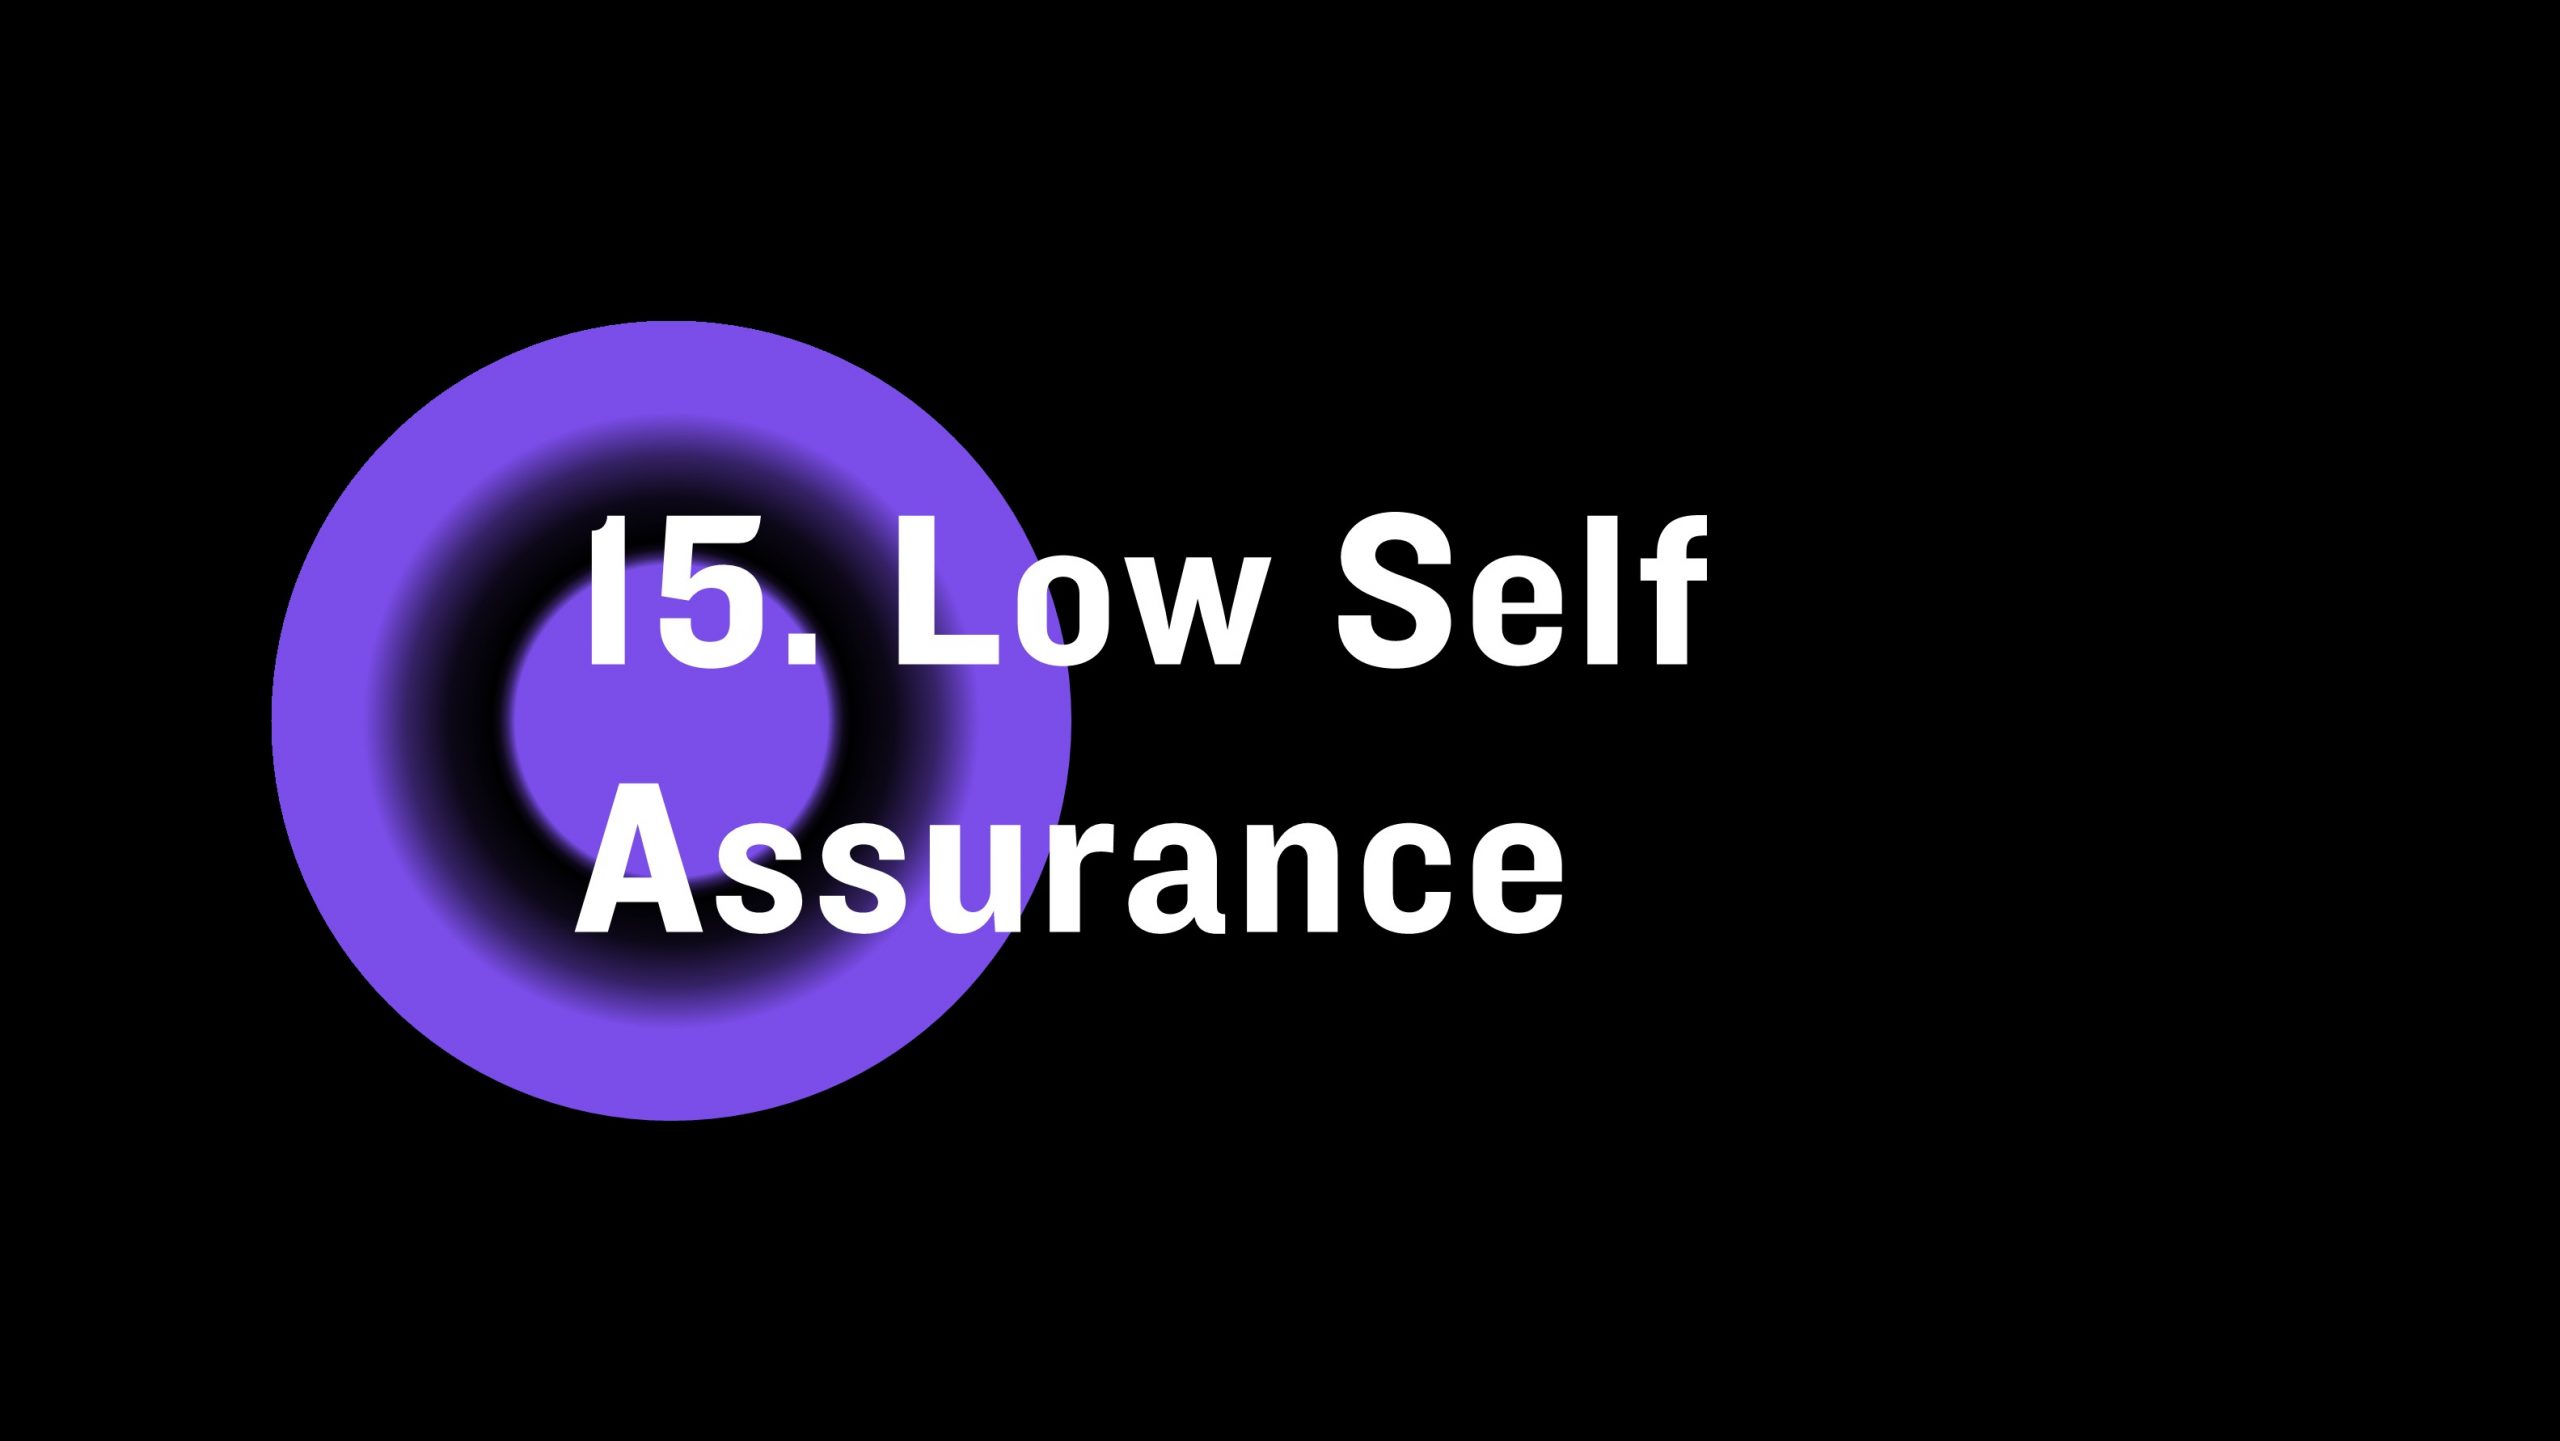 Low self-assurance